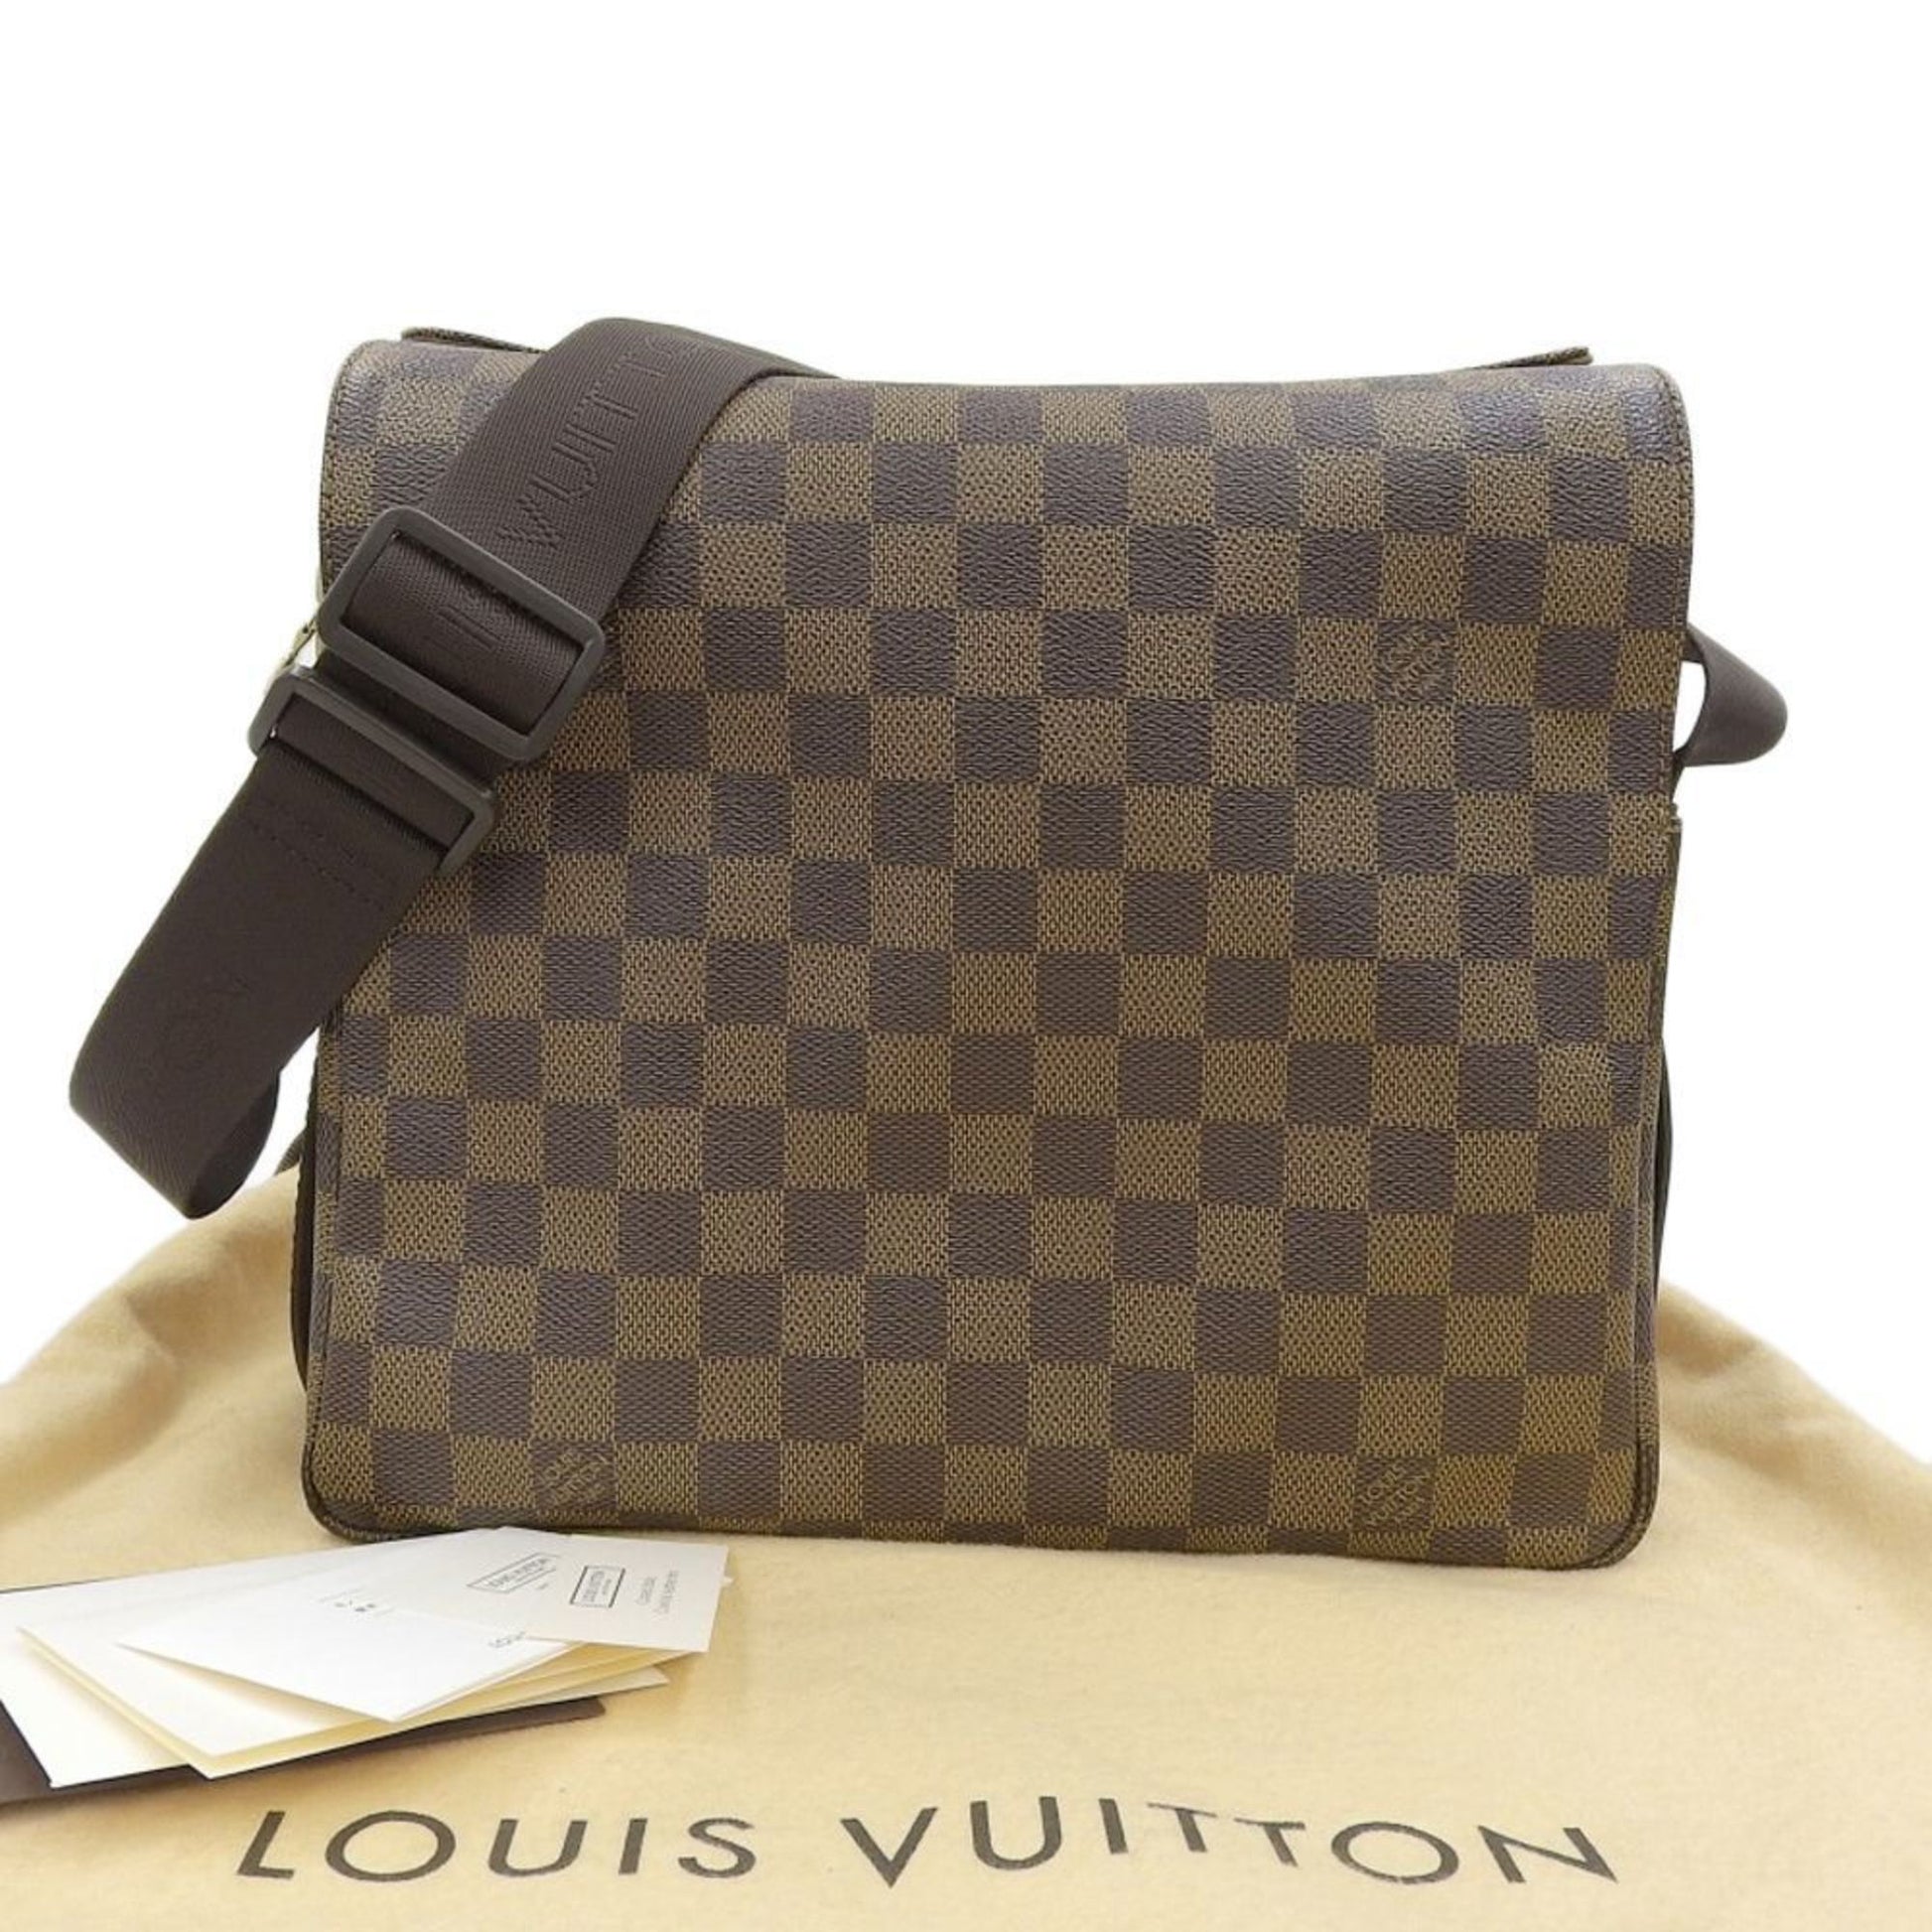 Authenticated Used LOUIS VUITTON Louis Vuitton Naviglio N45255